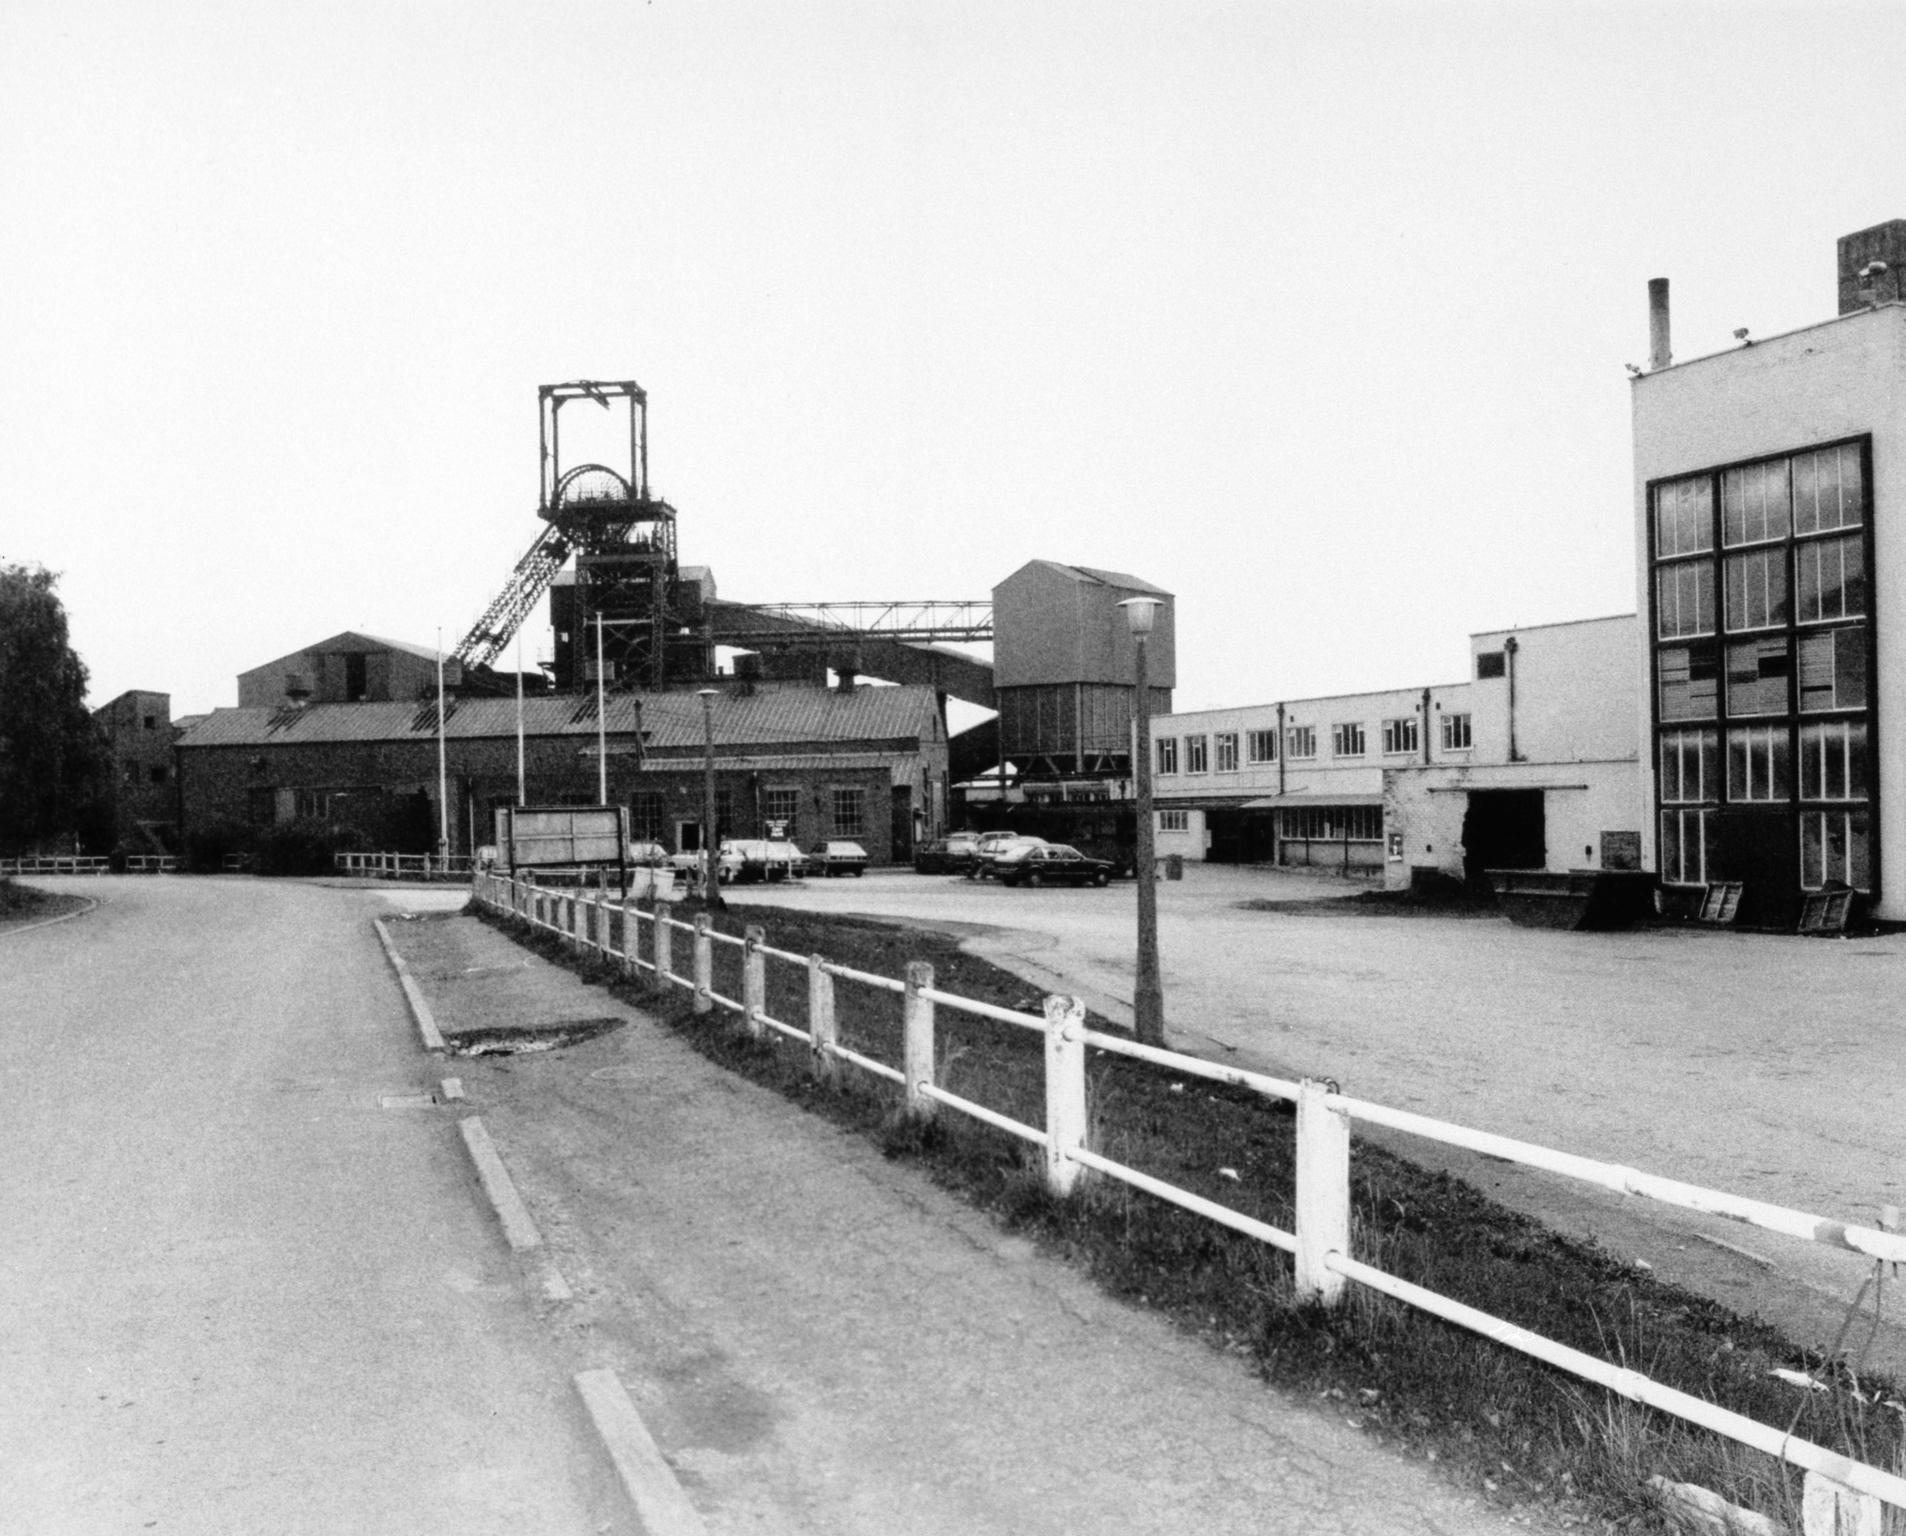 Bersham Colliery, photograph